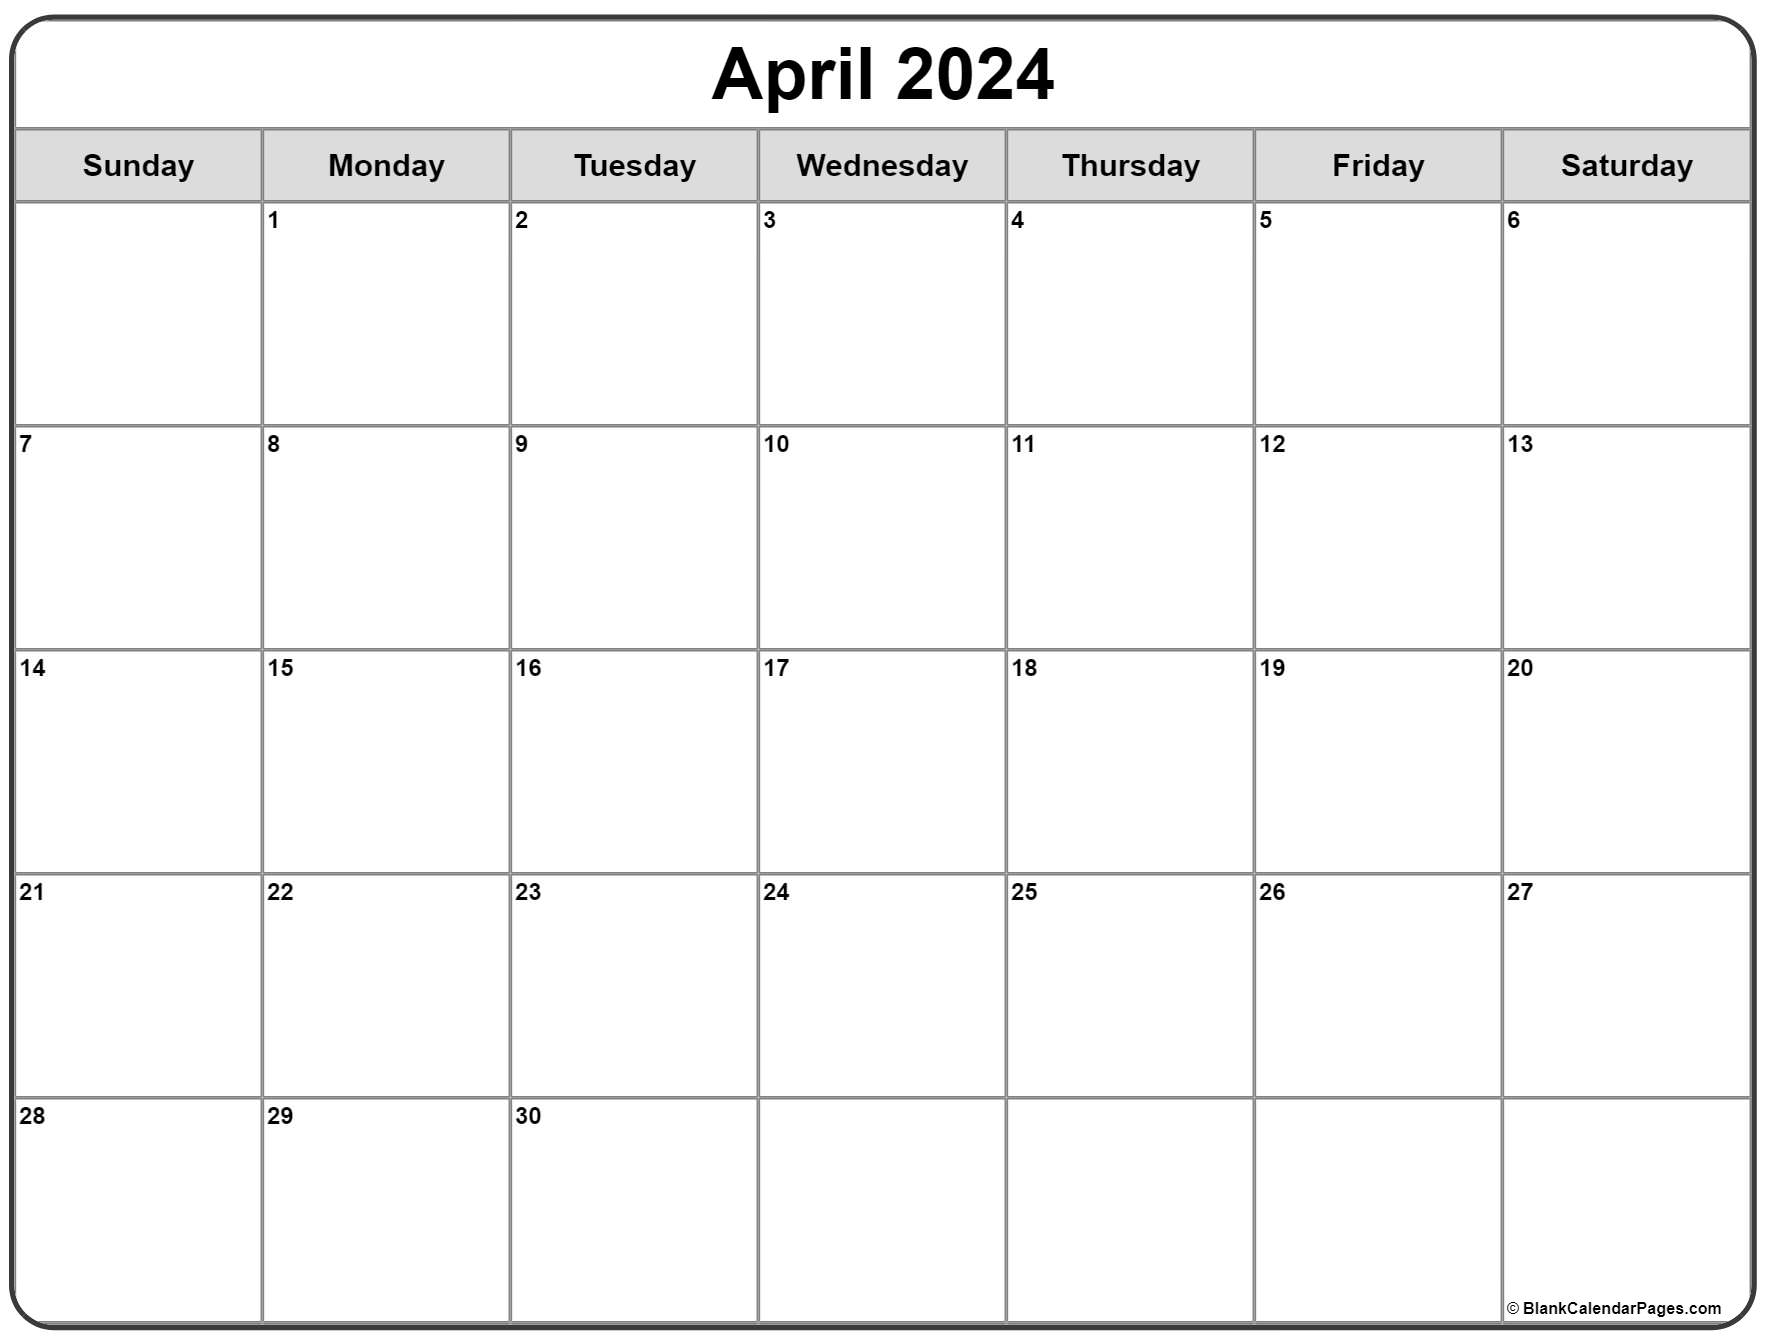 april-2023-calendar-free-printable-calendar-april-2023-calendar-free-printable-calendar